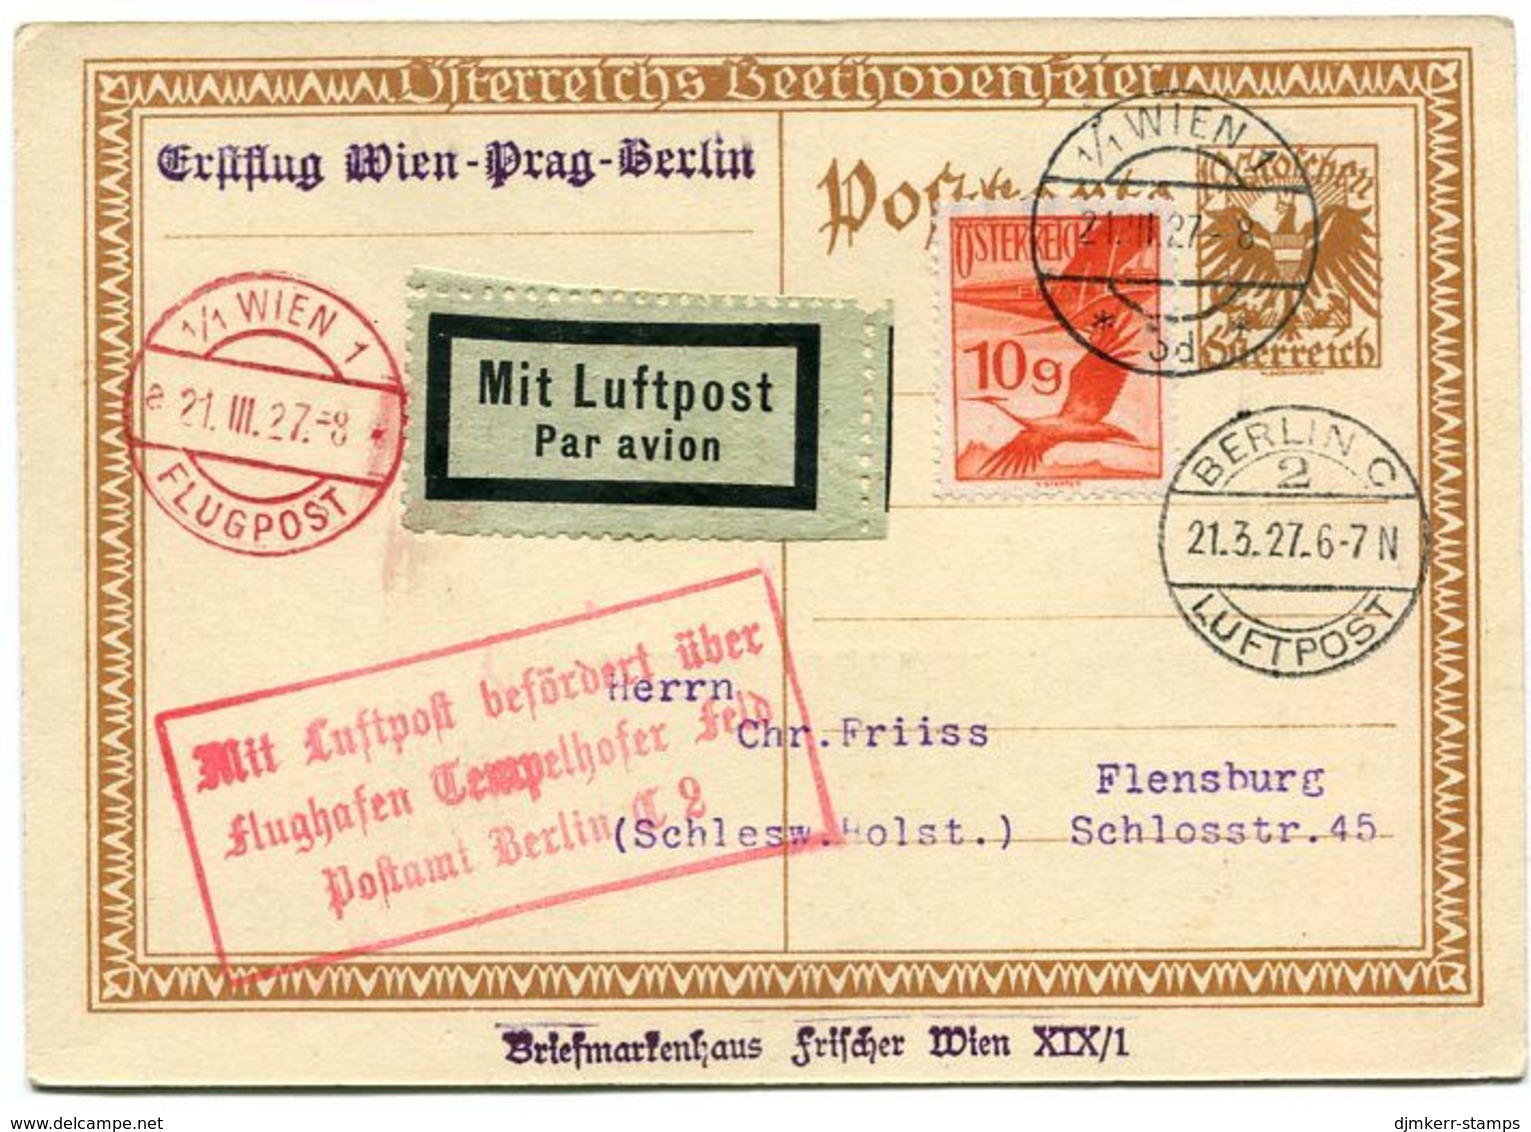 AUSTRIA 1927 First Flight Wien-Prague-Berlin On Postcard.  Beethoven Commemoration On Obverse. - Lettres & Documents